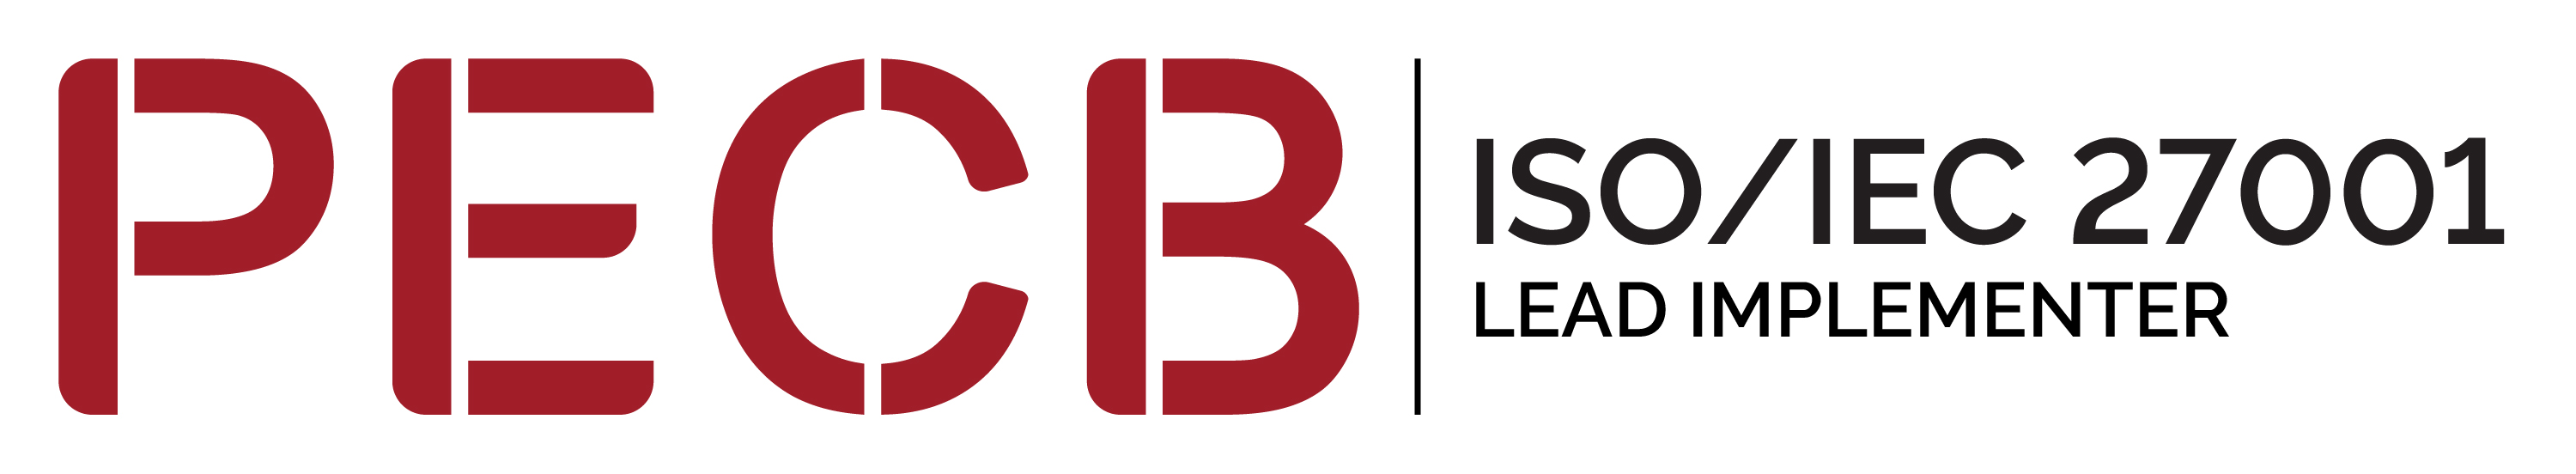 PECB Logo ISO 27001 Lead Implementer